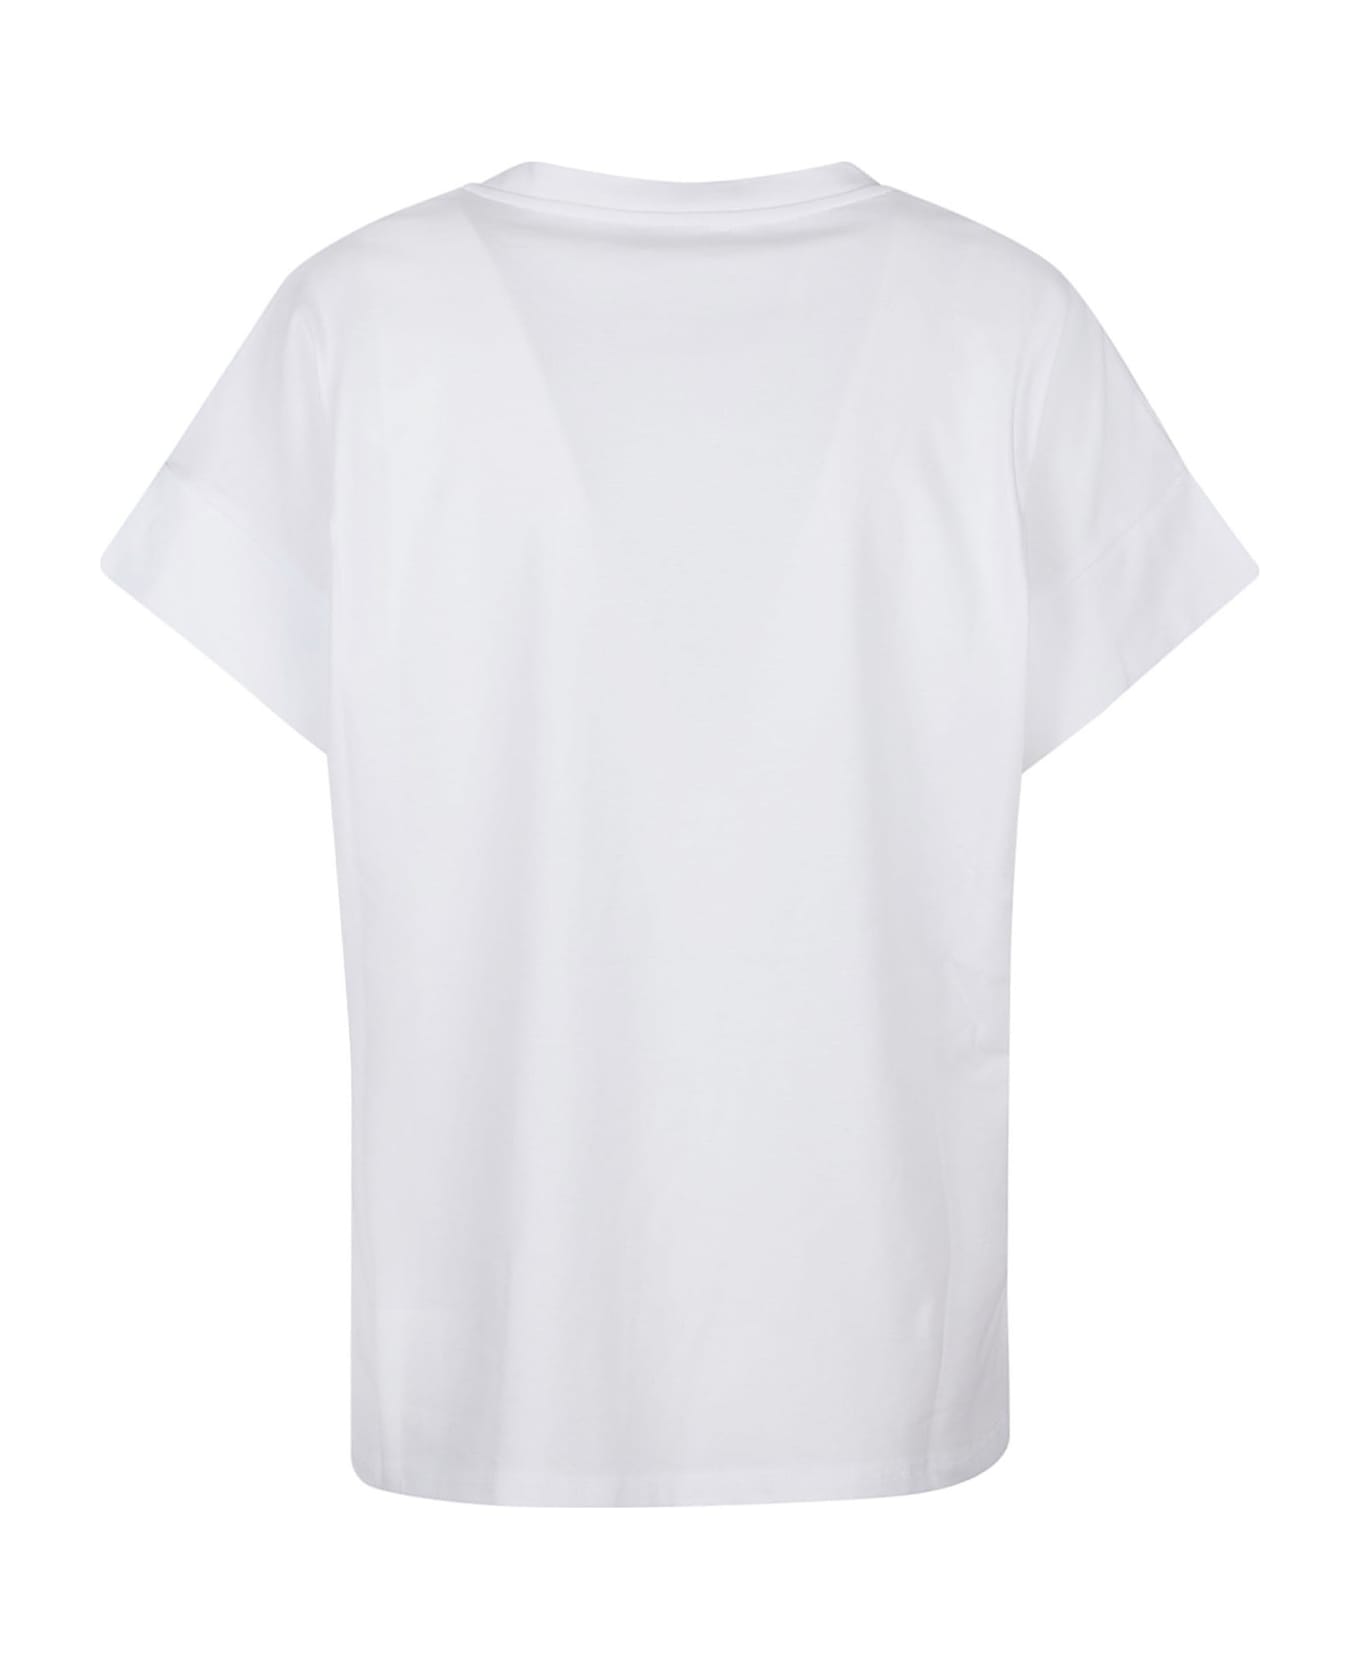 Snobby Sheep T-shirt - Off White